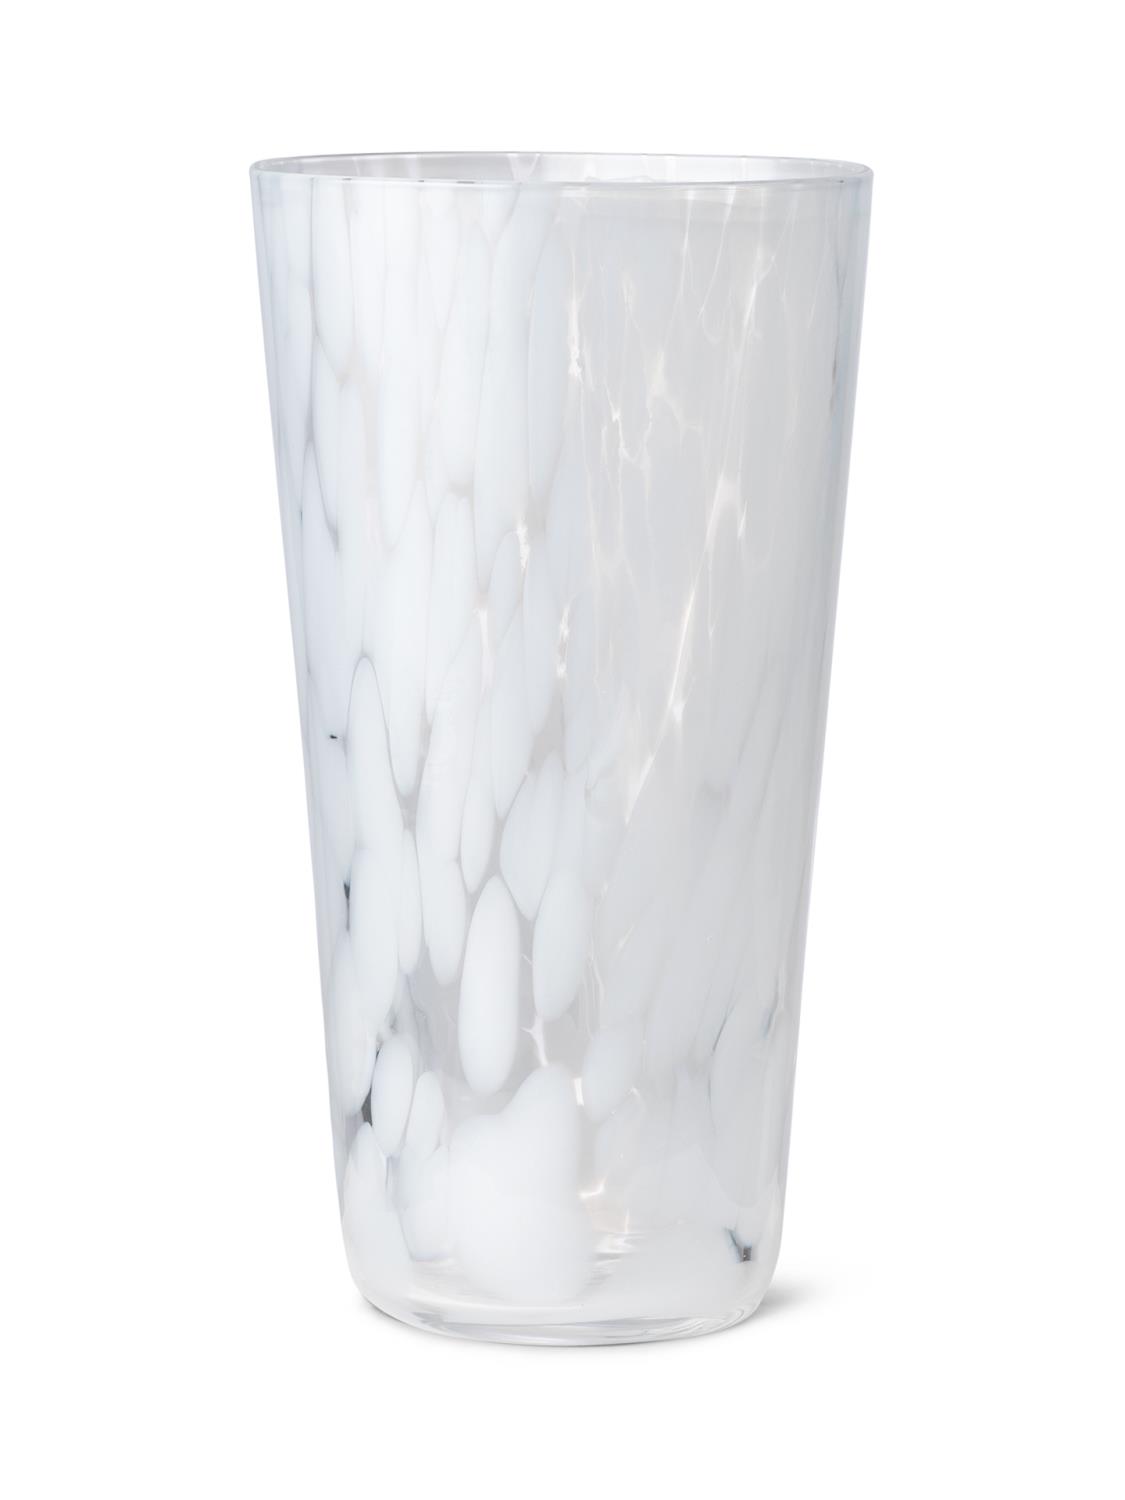 Ferm Living - Casca Vase - Milk